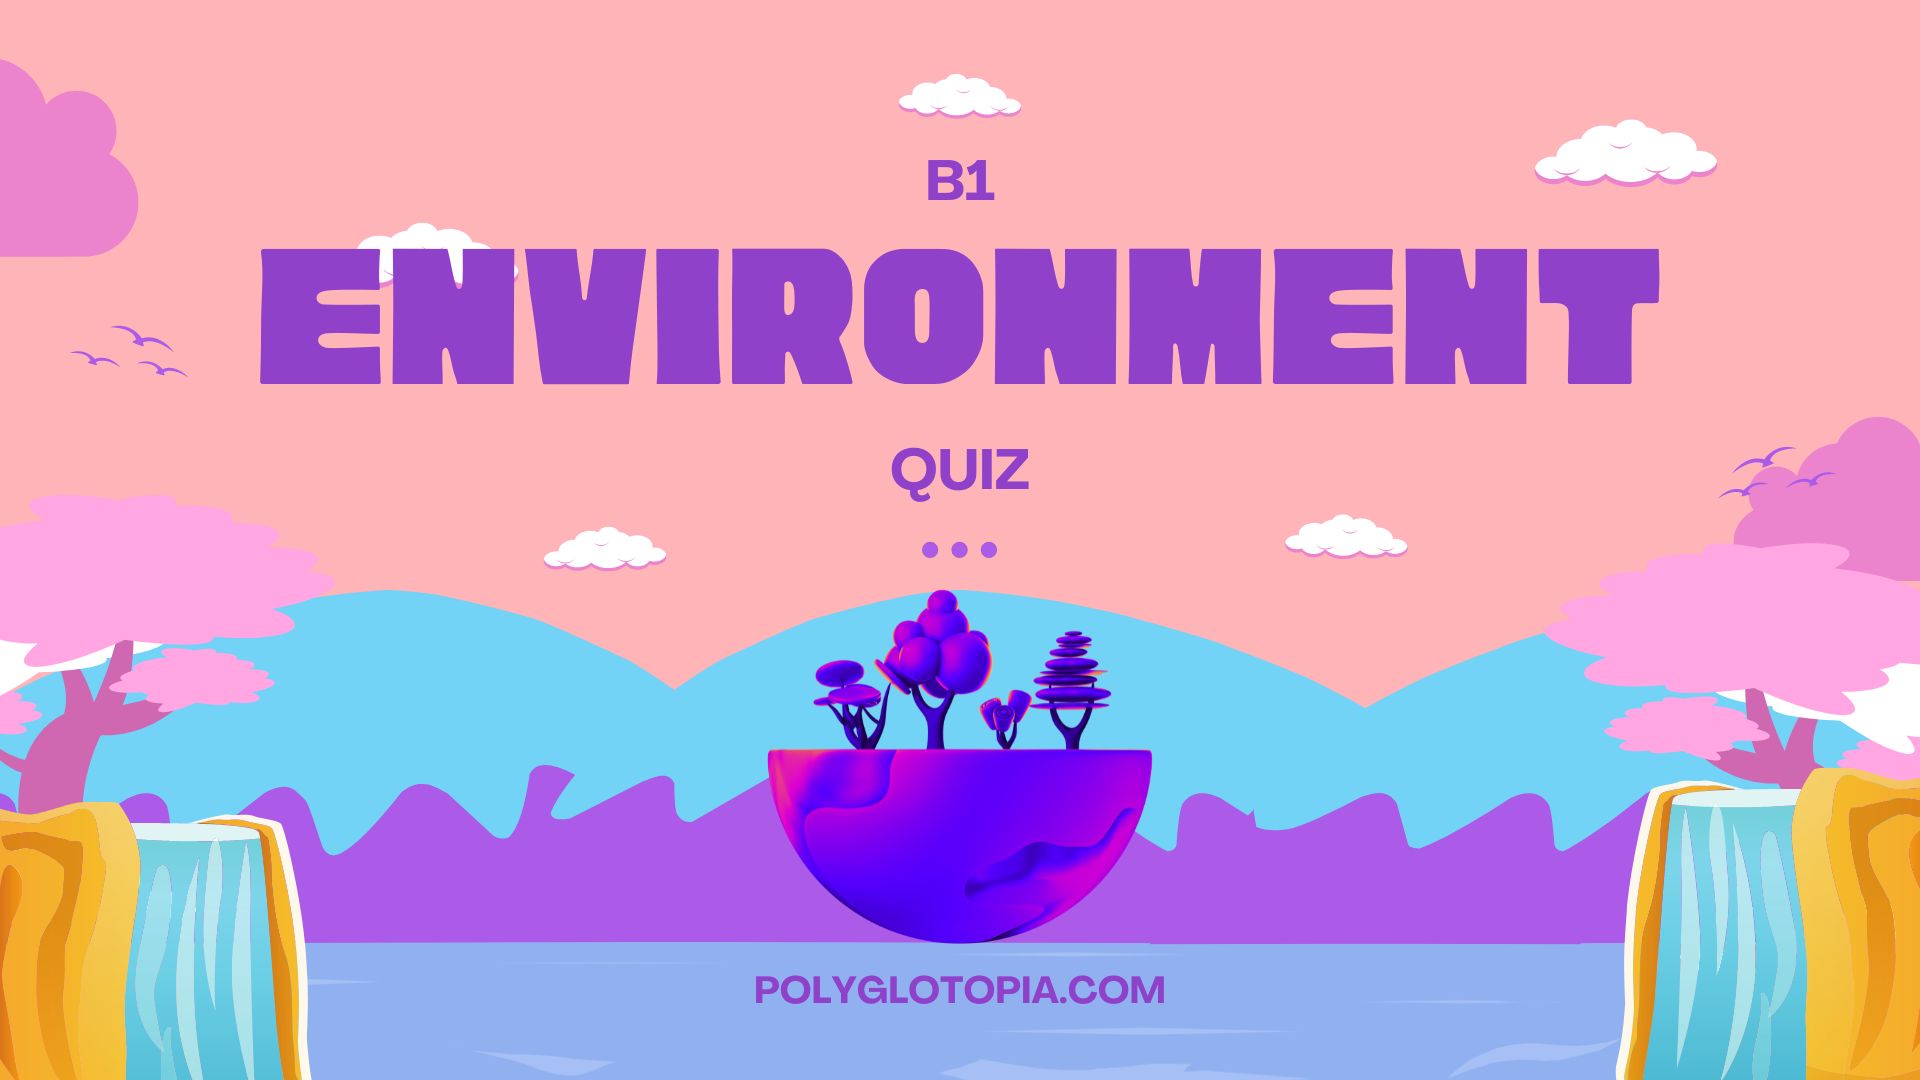 b1-vocabulary-list-quiz-environment-polyglotopia